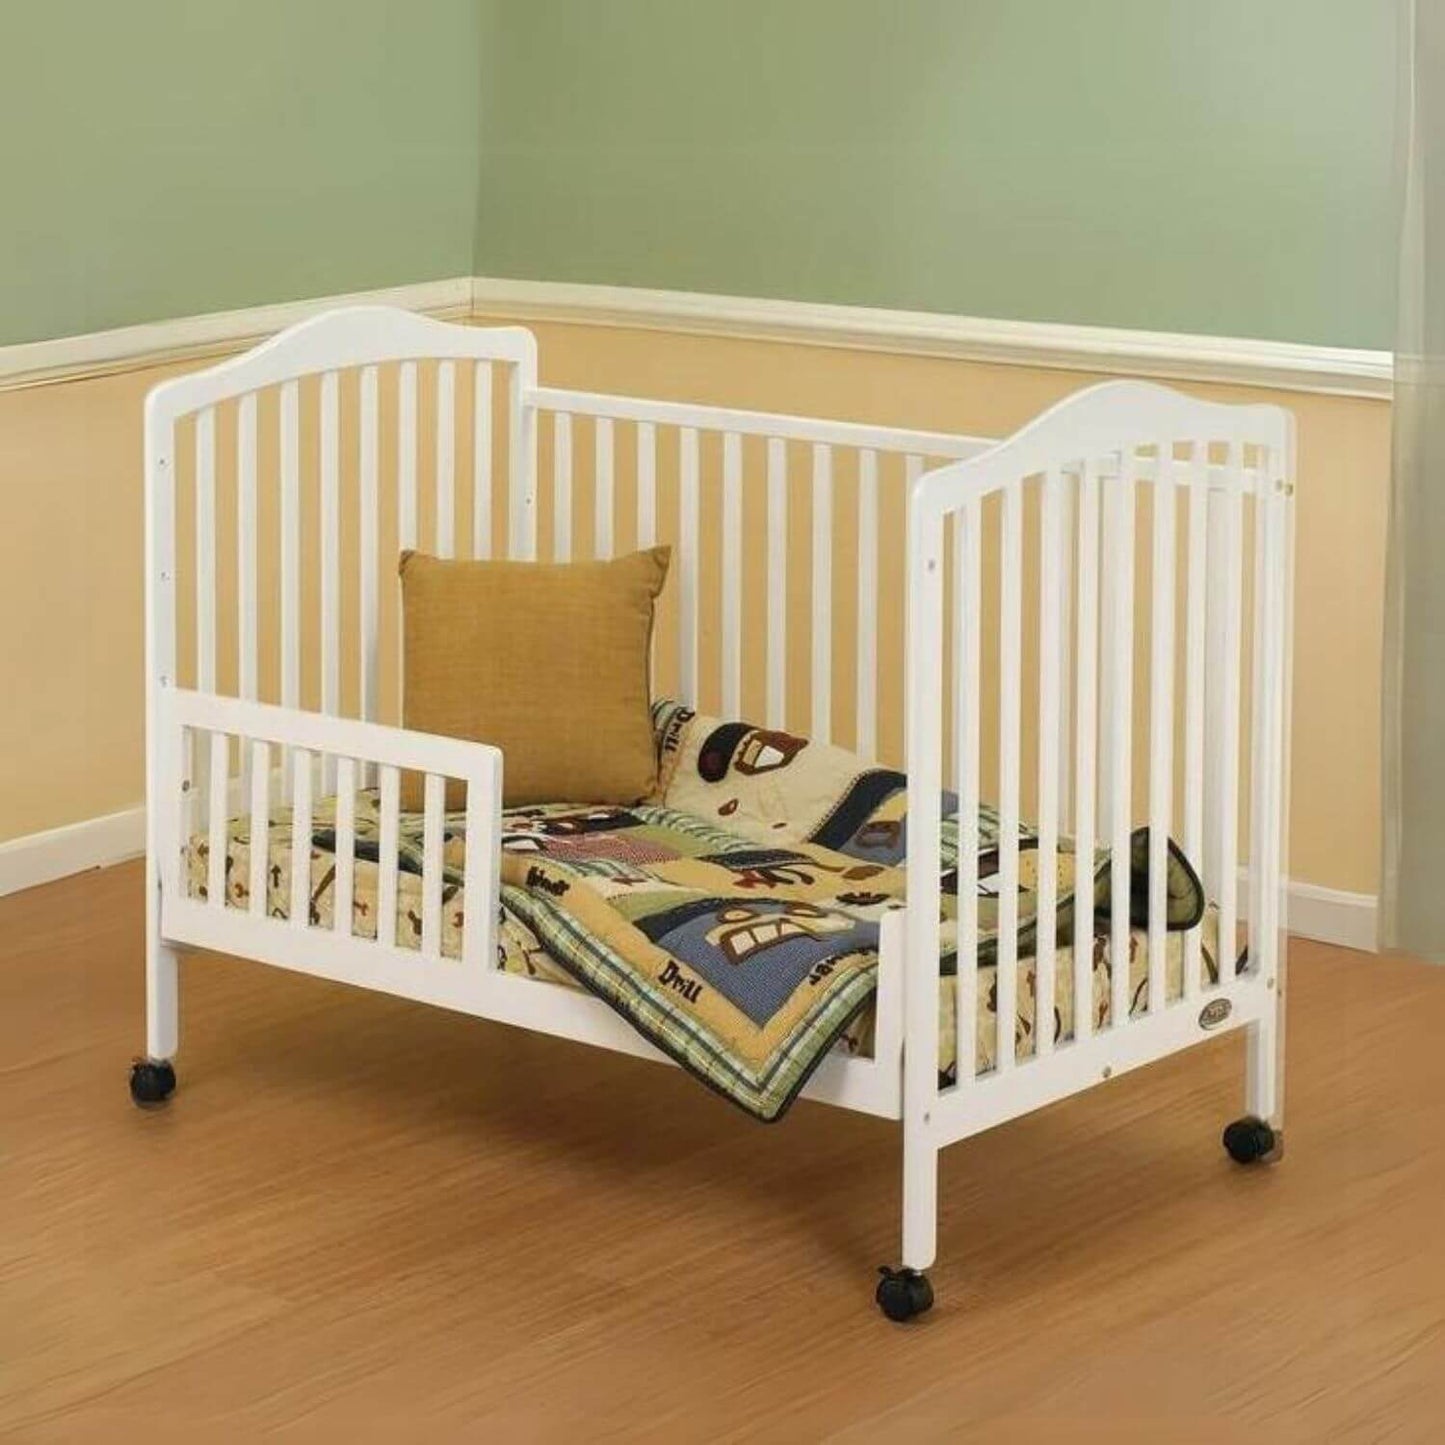 Orbelle Jenny 3-in-1 Full size crib White - Lifestyle